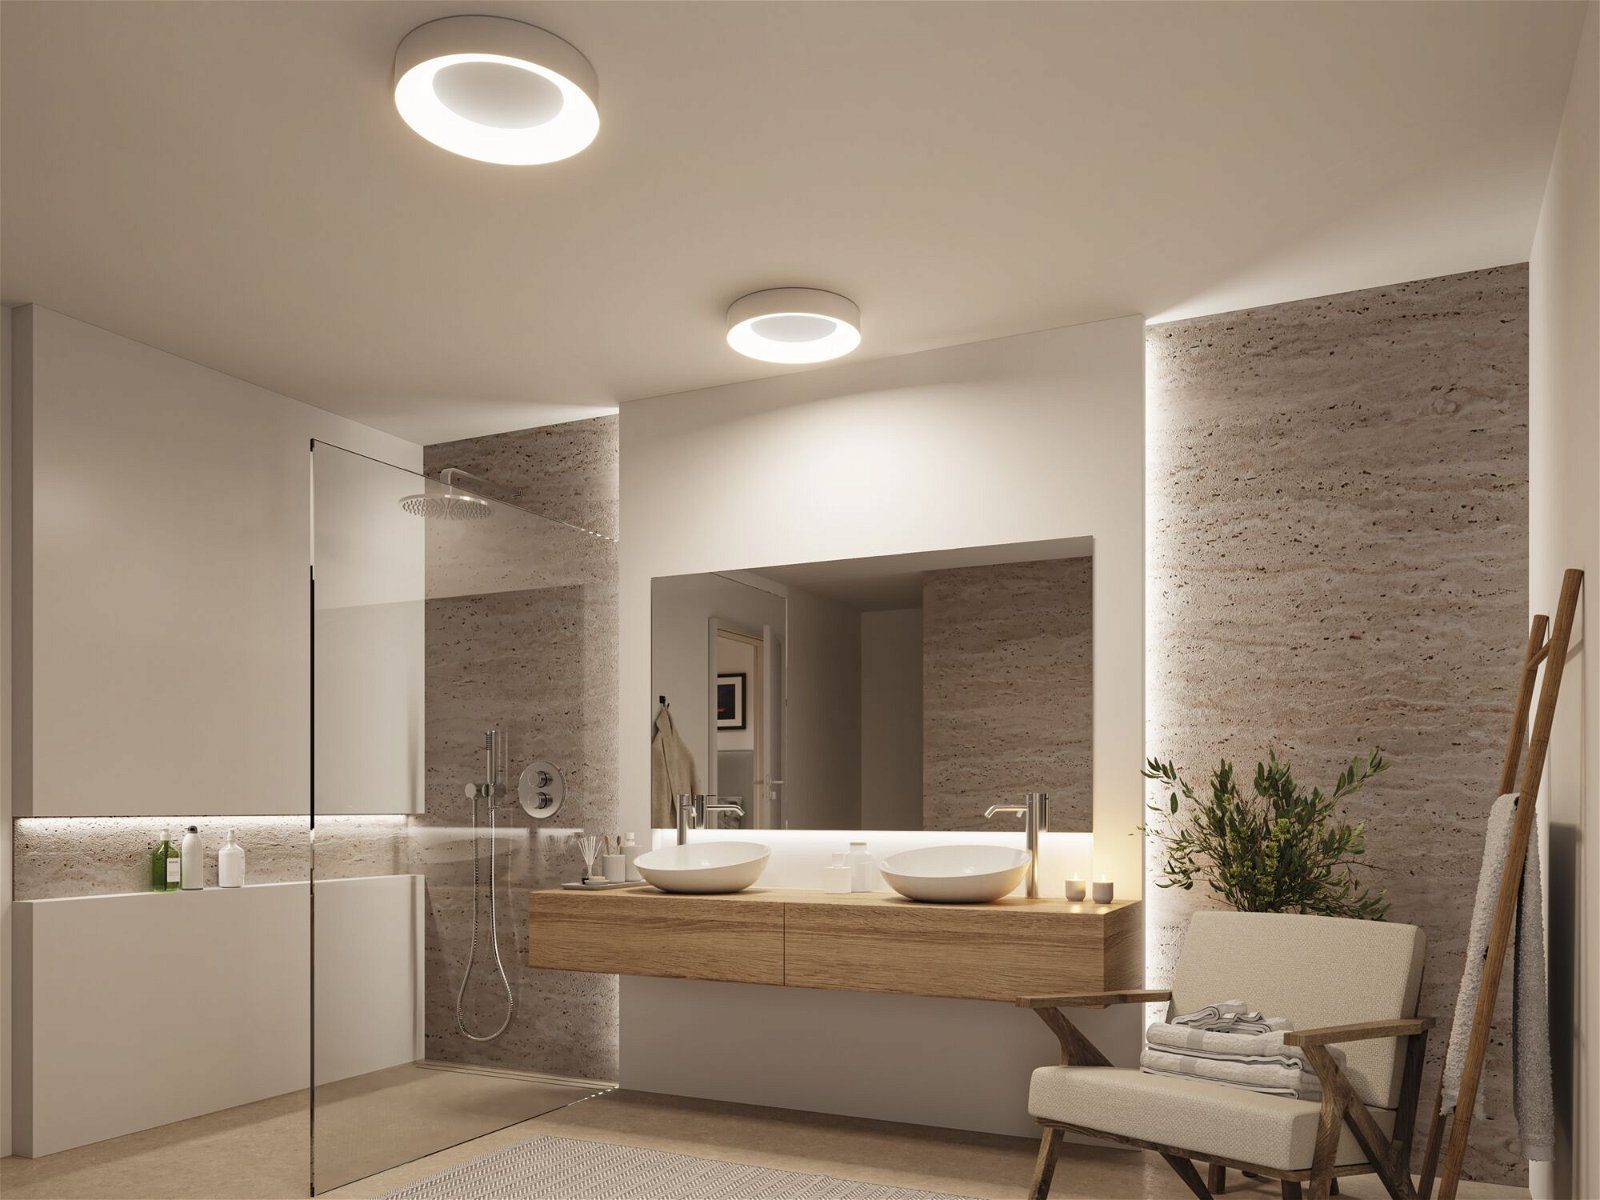 Casca 1x23W Alu LED fest Bathroom Paulmann IP44 WhiteSwitch 400mm integriert, Tageslichtweiß, LED 230V Selection Deckenleuchte Metall/Kunststoff,